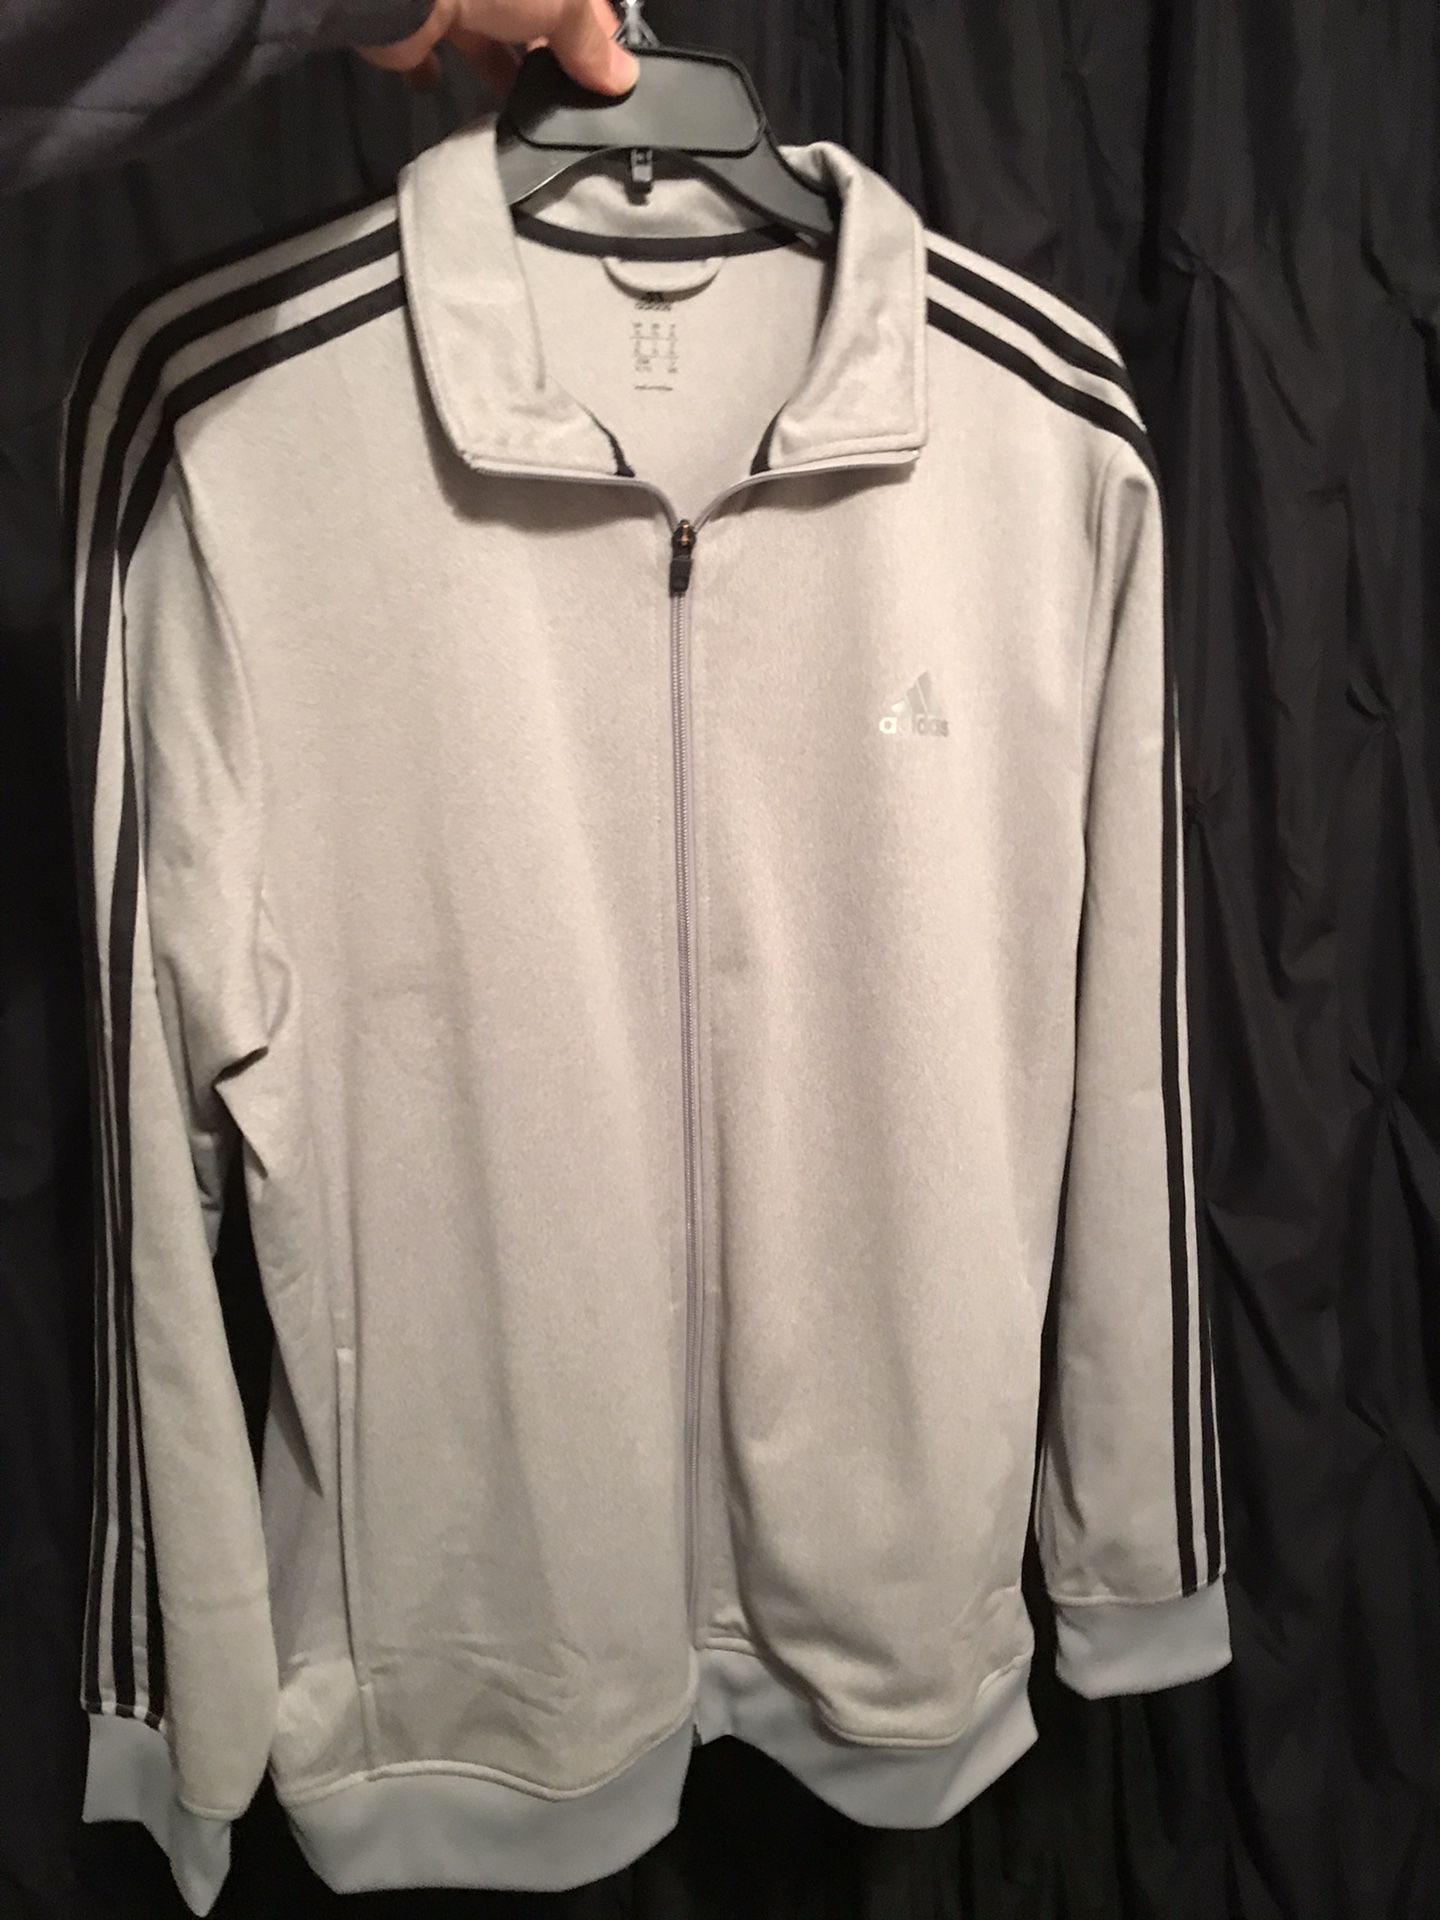 Adidas 3 stripe jacket